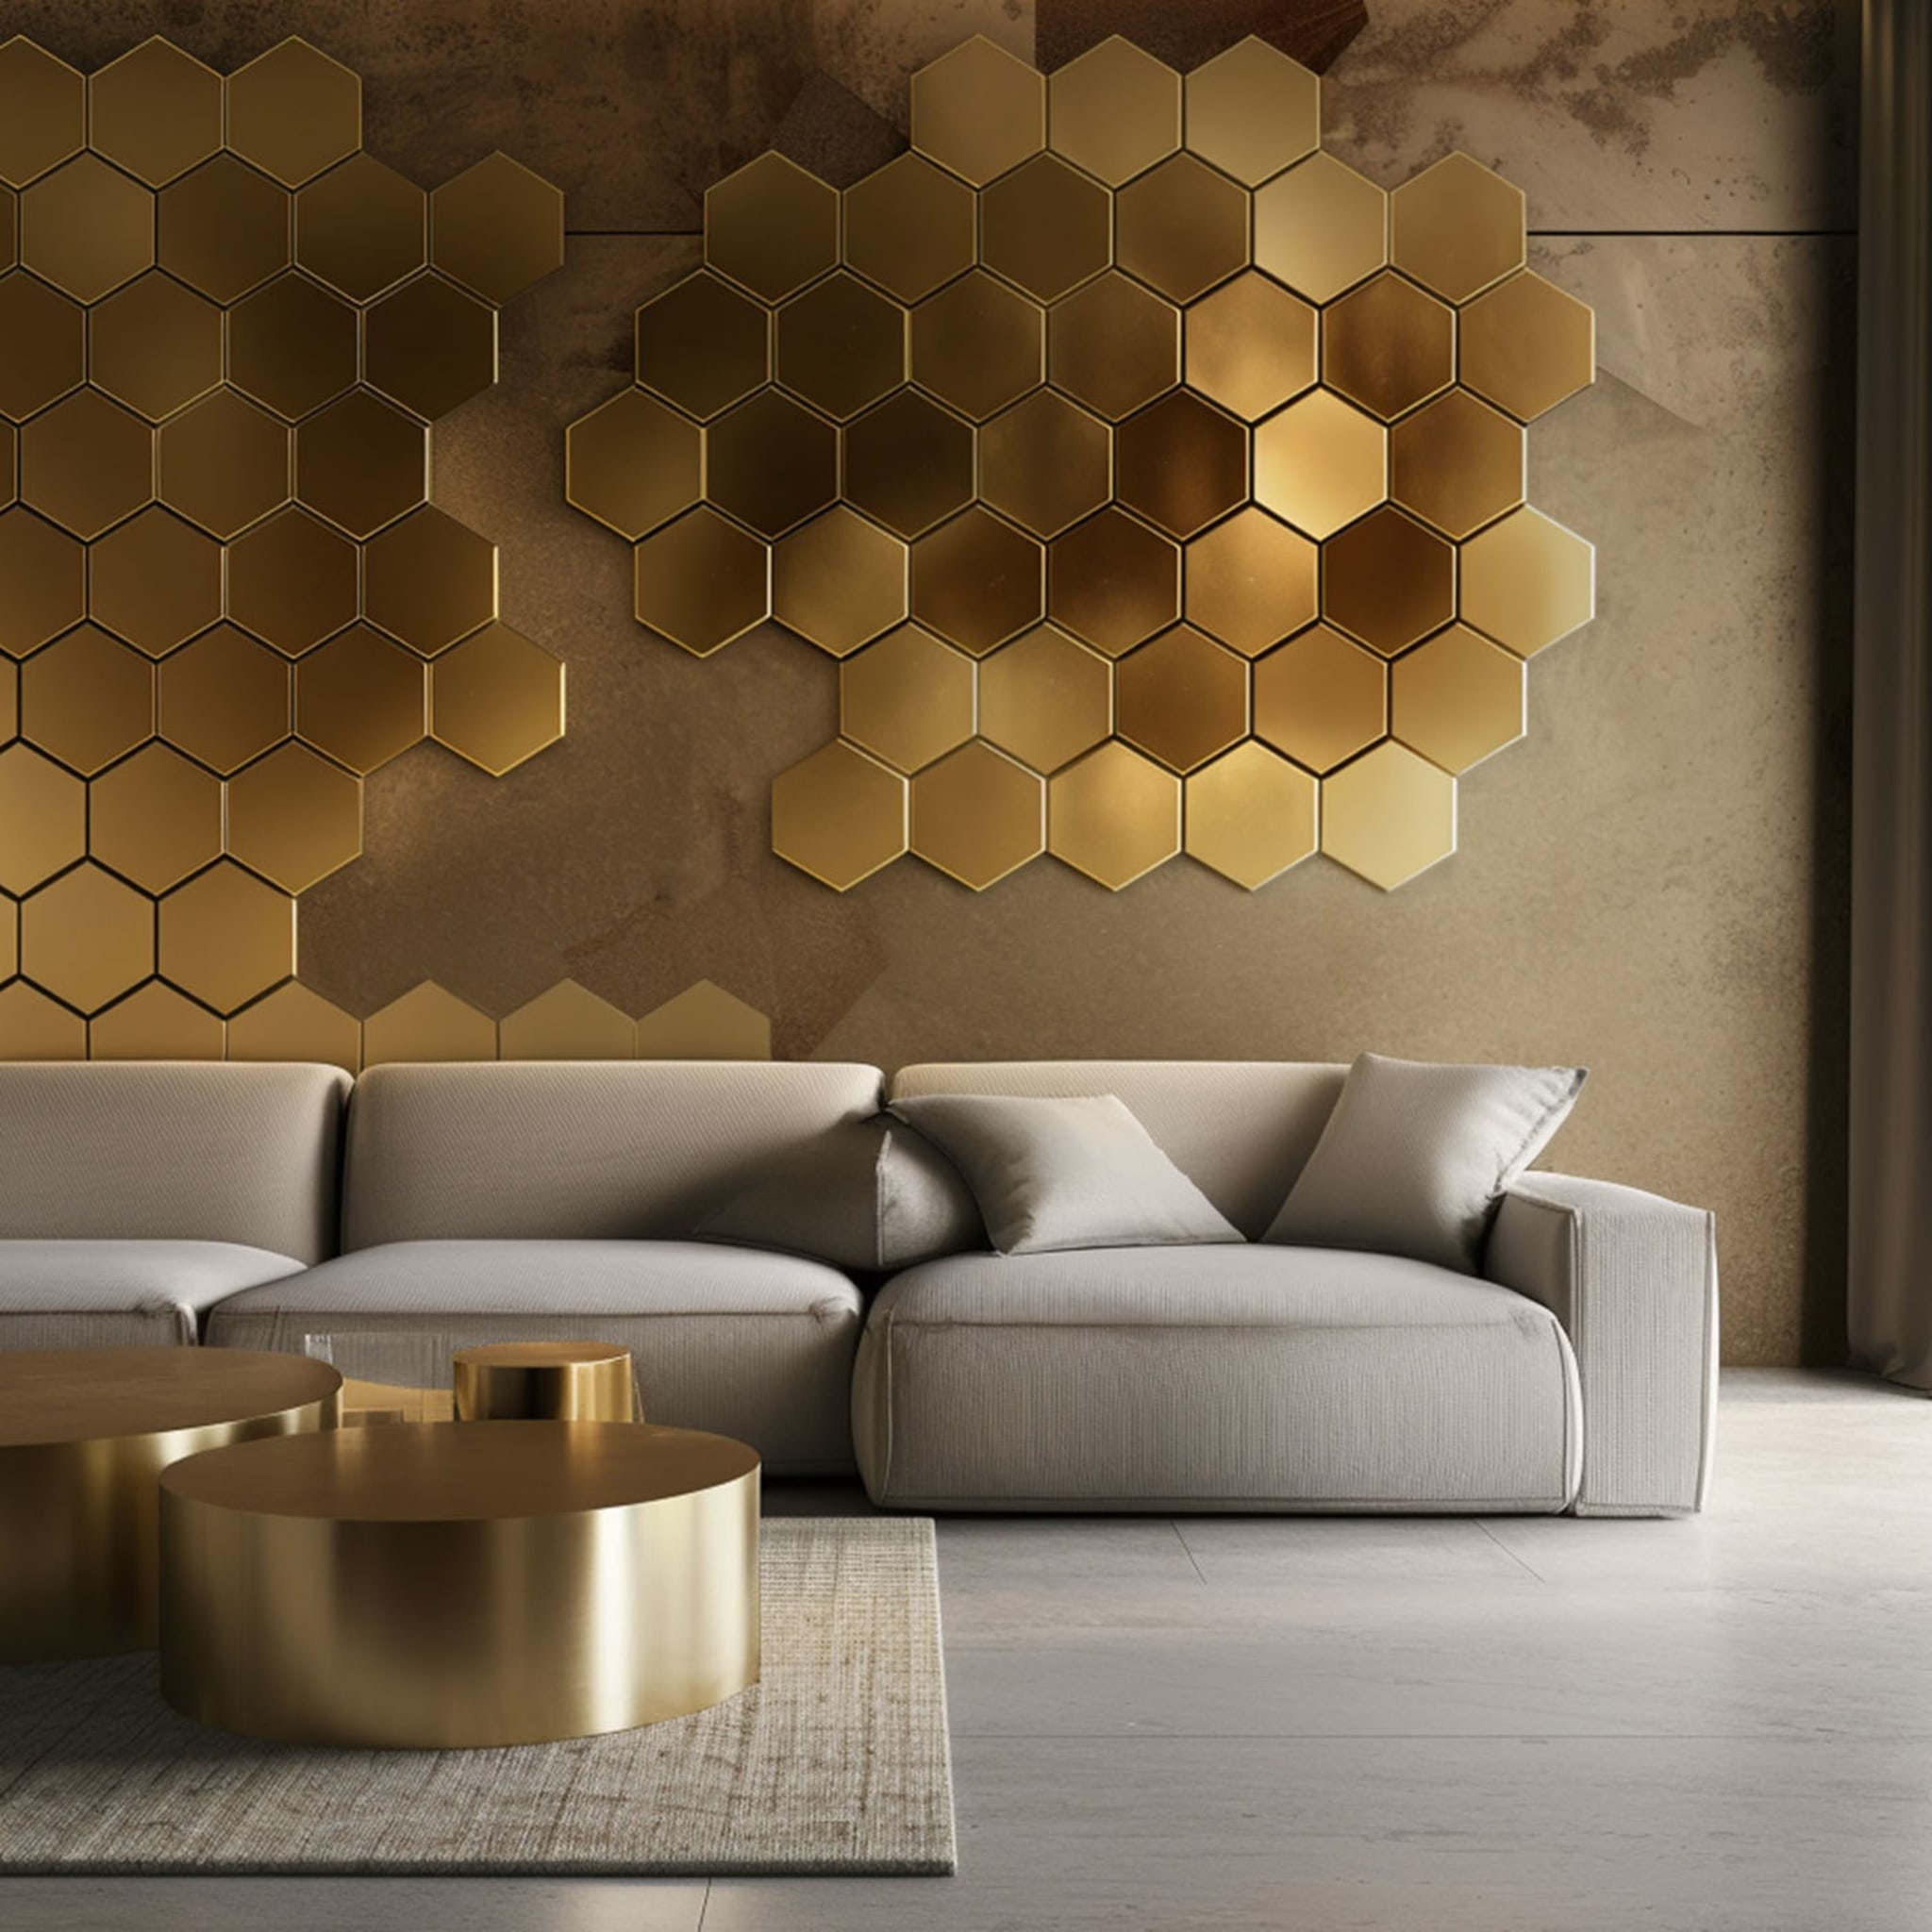 Infinito Set of 20 Hexagonal Scruffy-Looking Brass Tiles - Alternative view 5